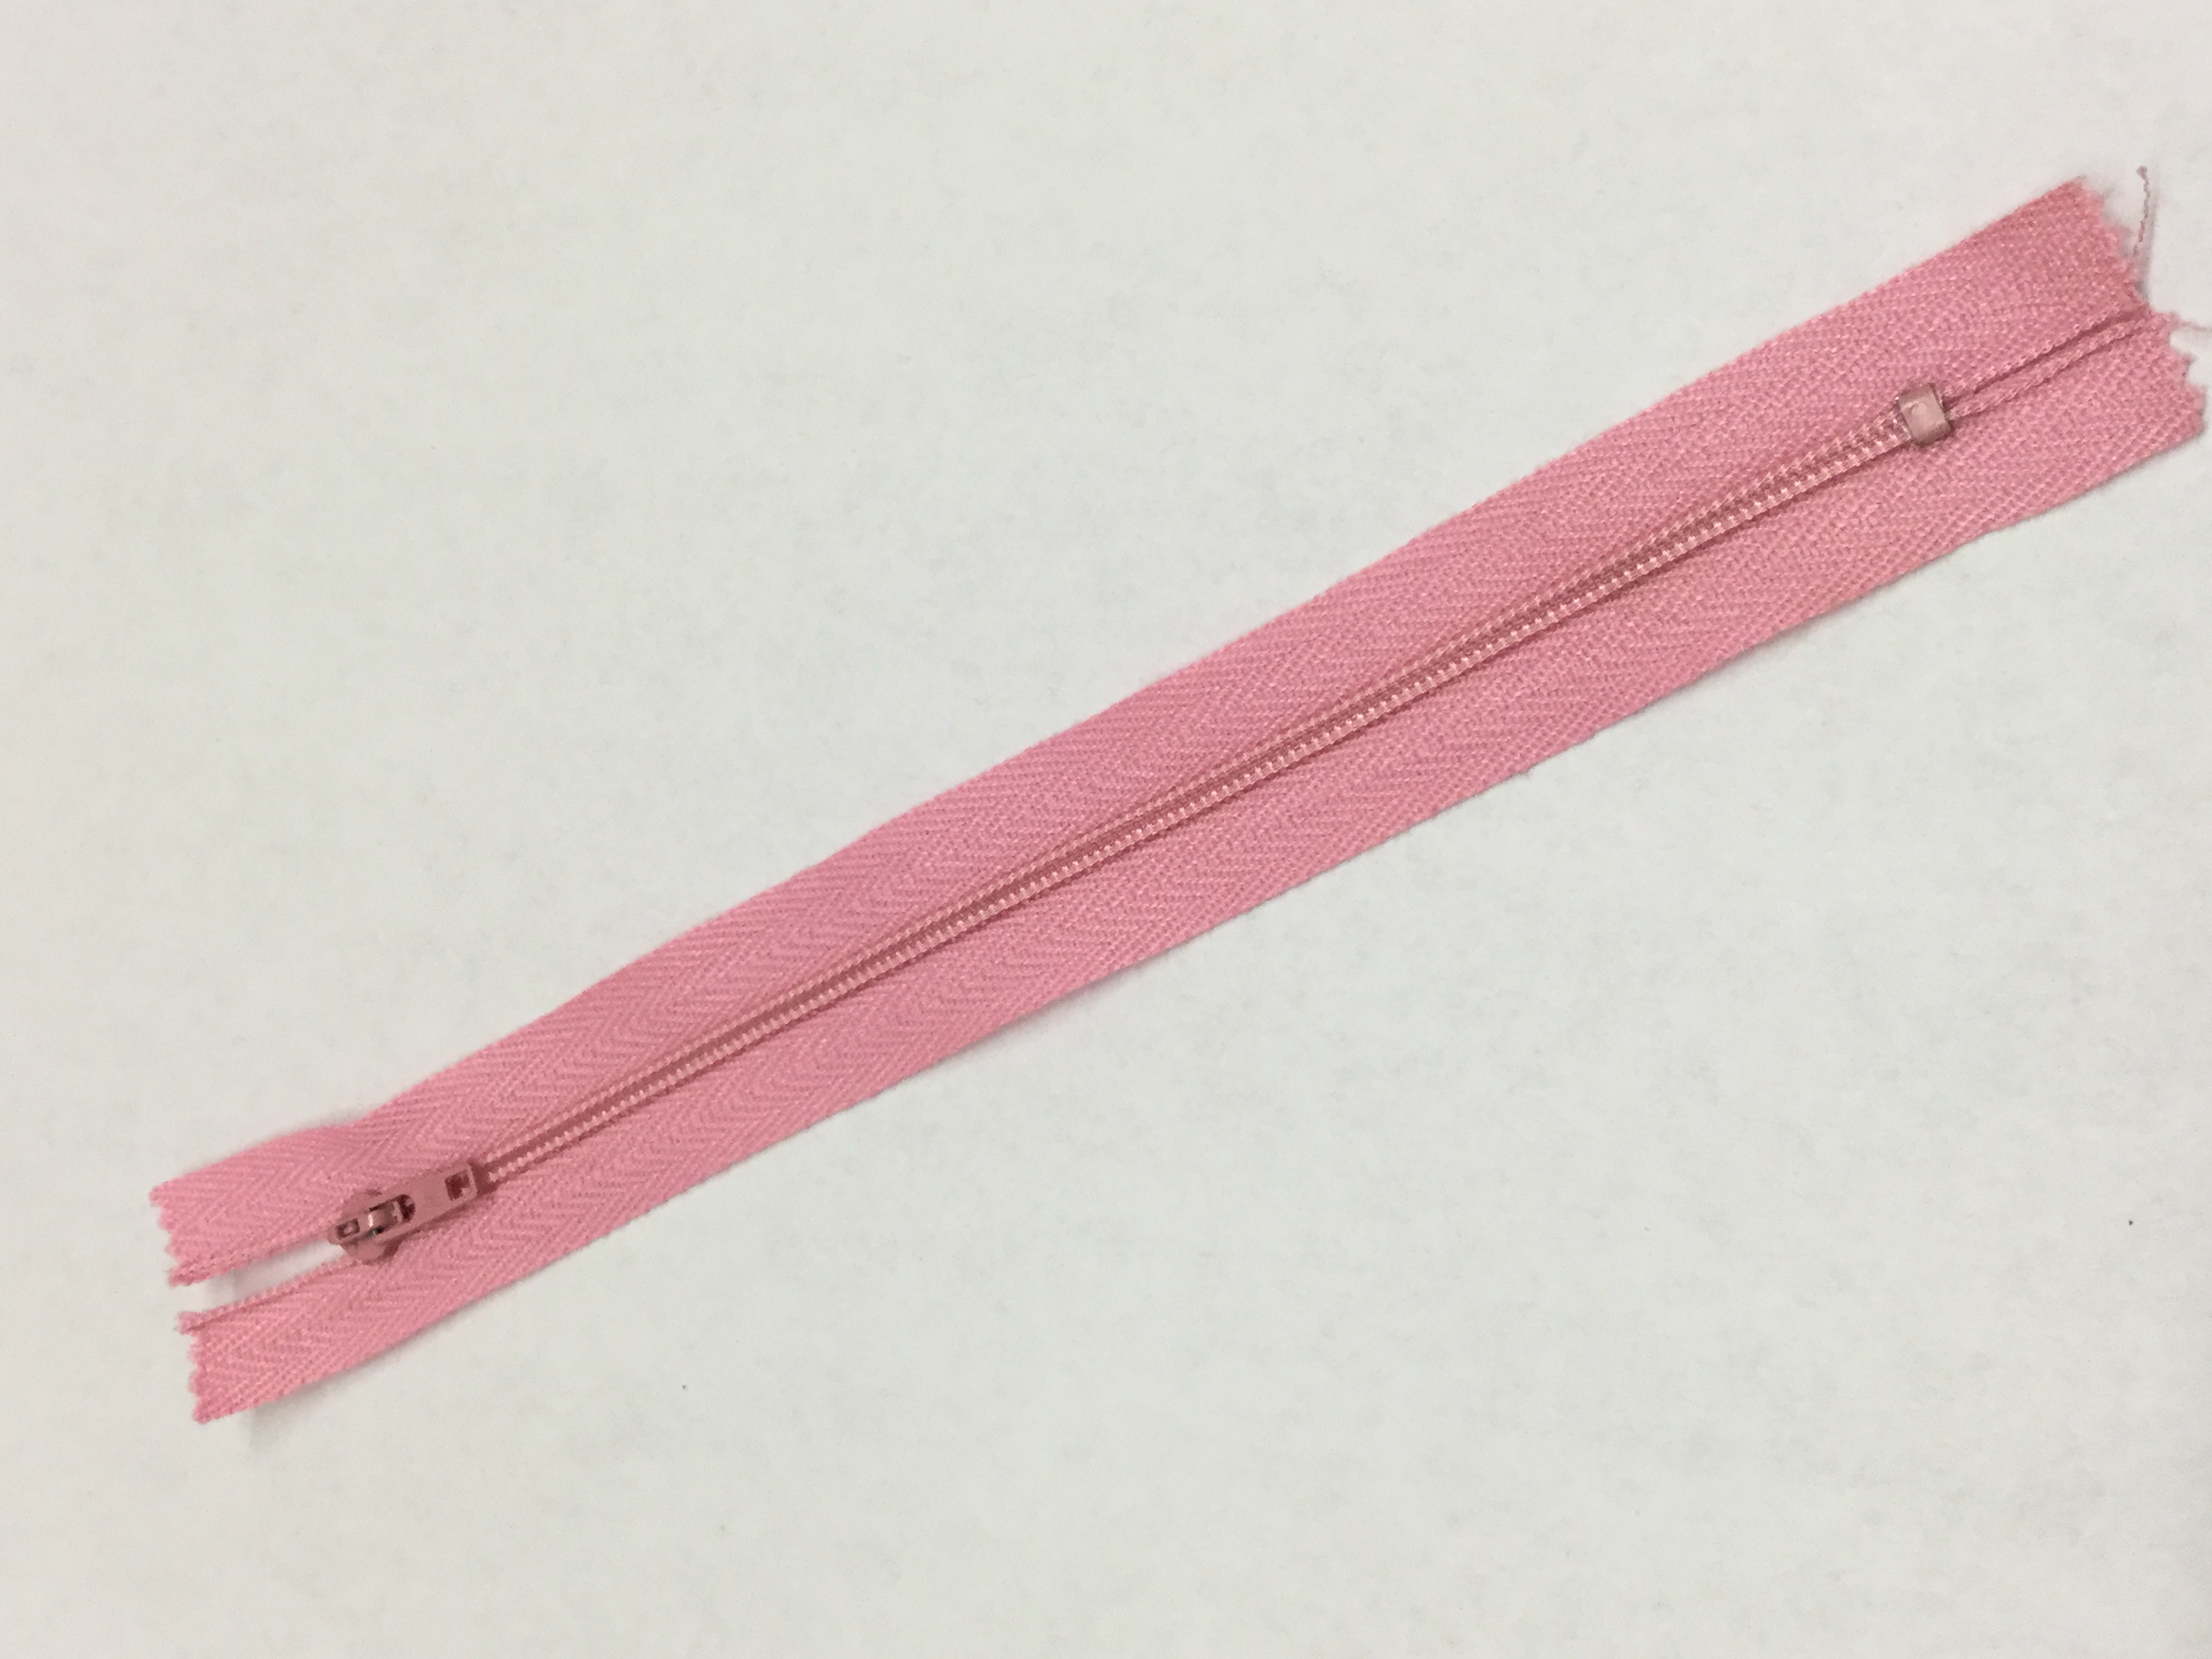 08 inch - Talon Nylon Coil Metal Pull Zipper - Pink